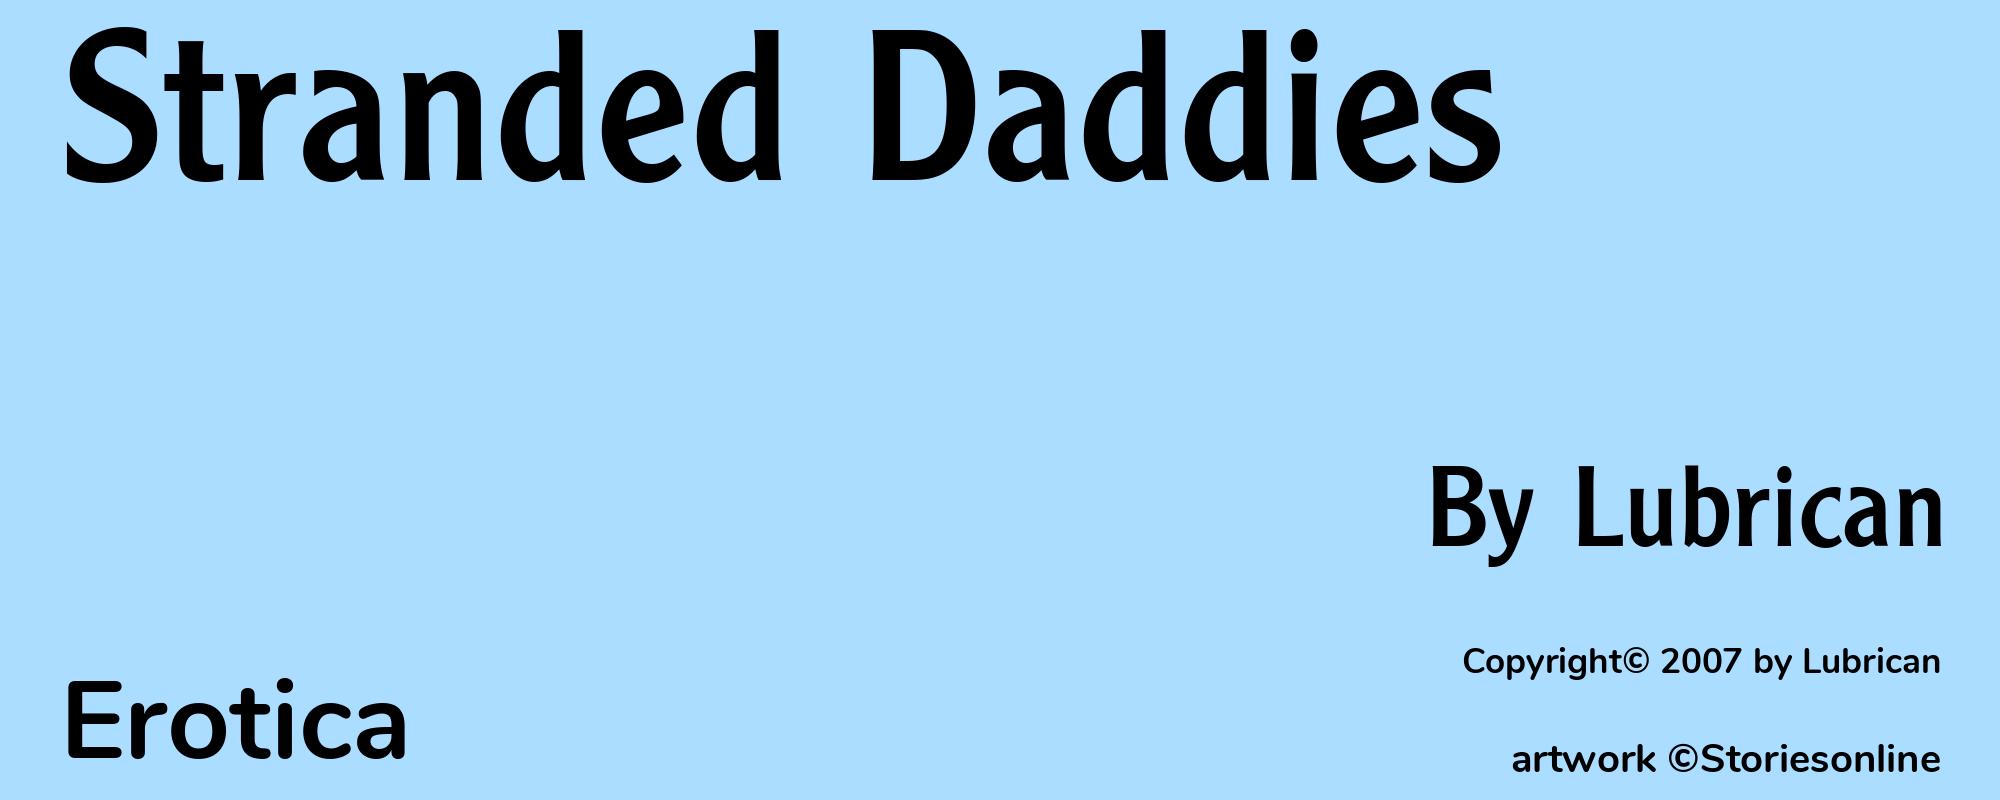 Stranded Daddies - Cover